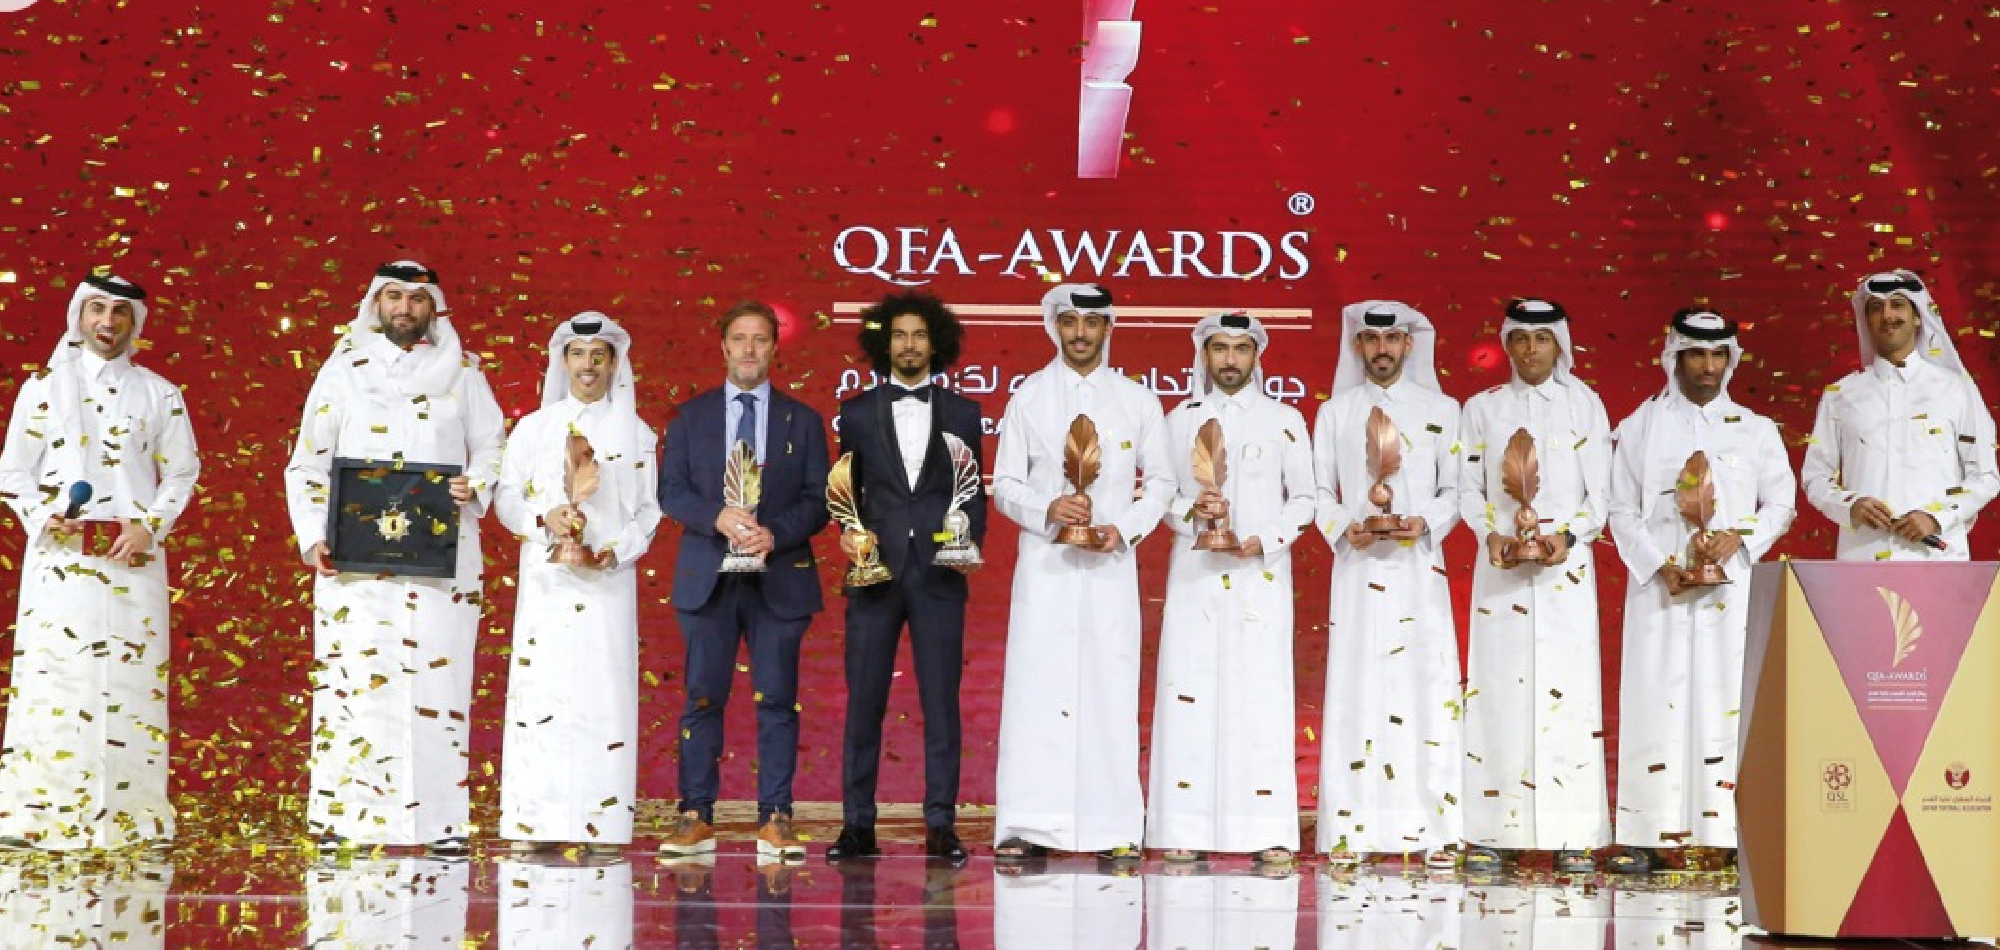 Qatar Football Association Honors Top Performers: Afif, Martins, and Jaber Shine at QFA Awards